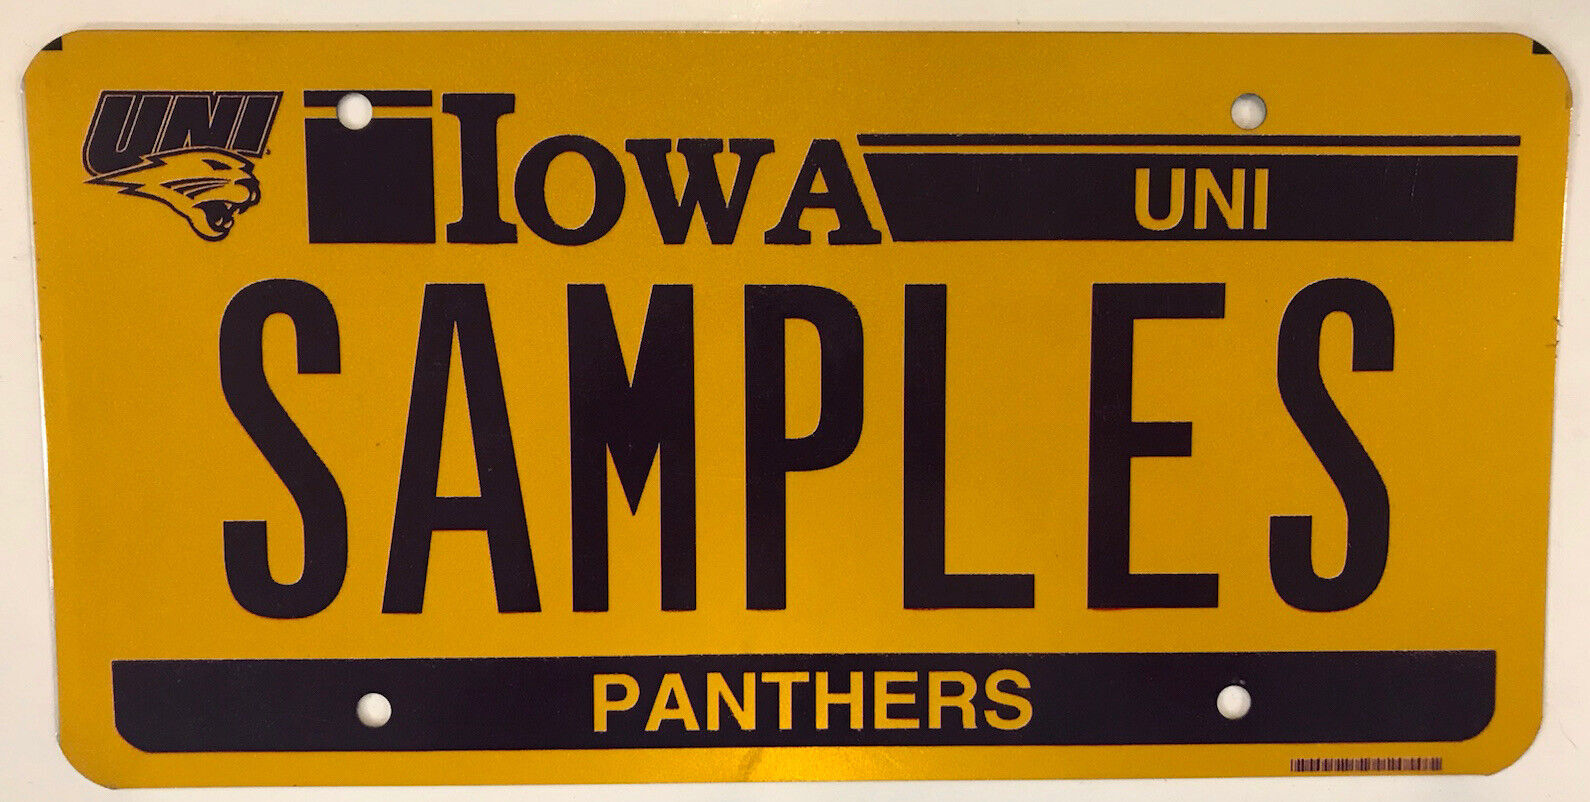 UNI vanity SAMPLES license plate Sampling Music Test Trial Selection Analysis IA